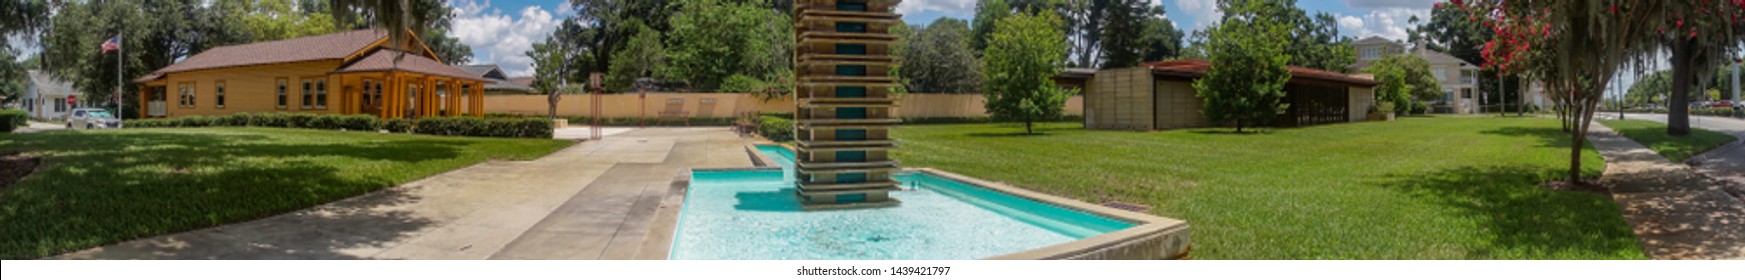 Usonian House designed by Frank Lloyd Wright located at Lakeland, Florida June 28,2019